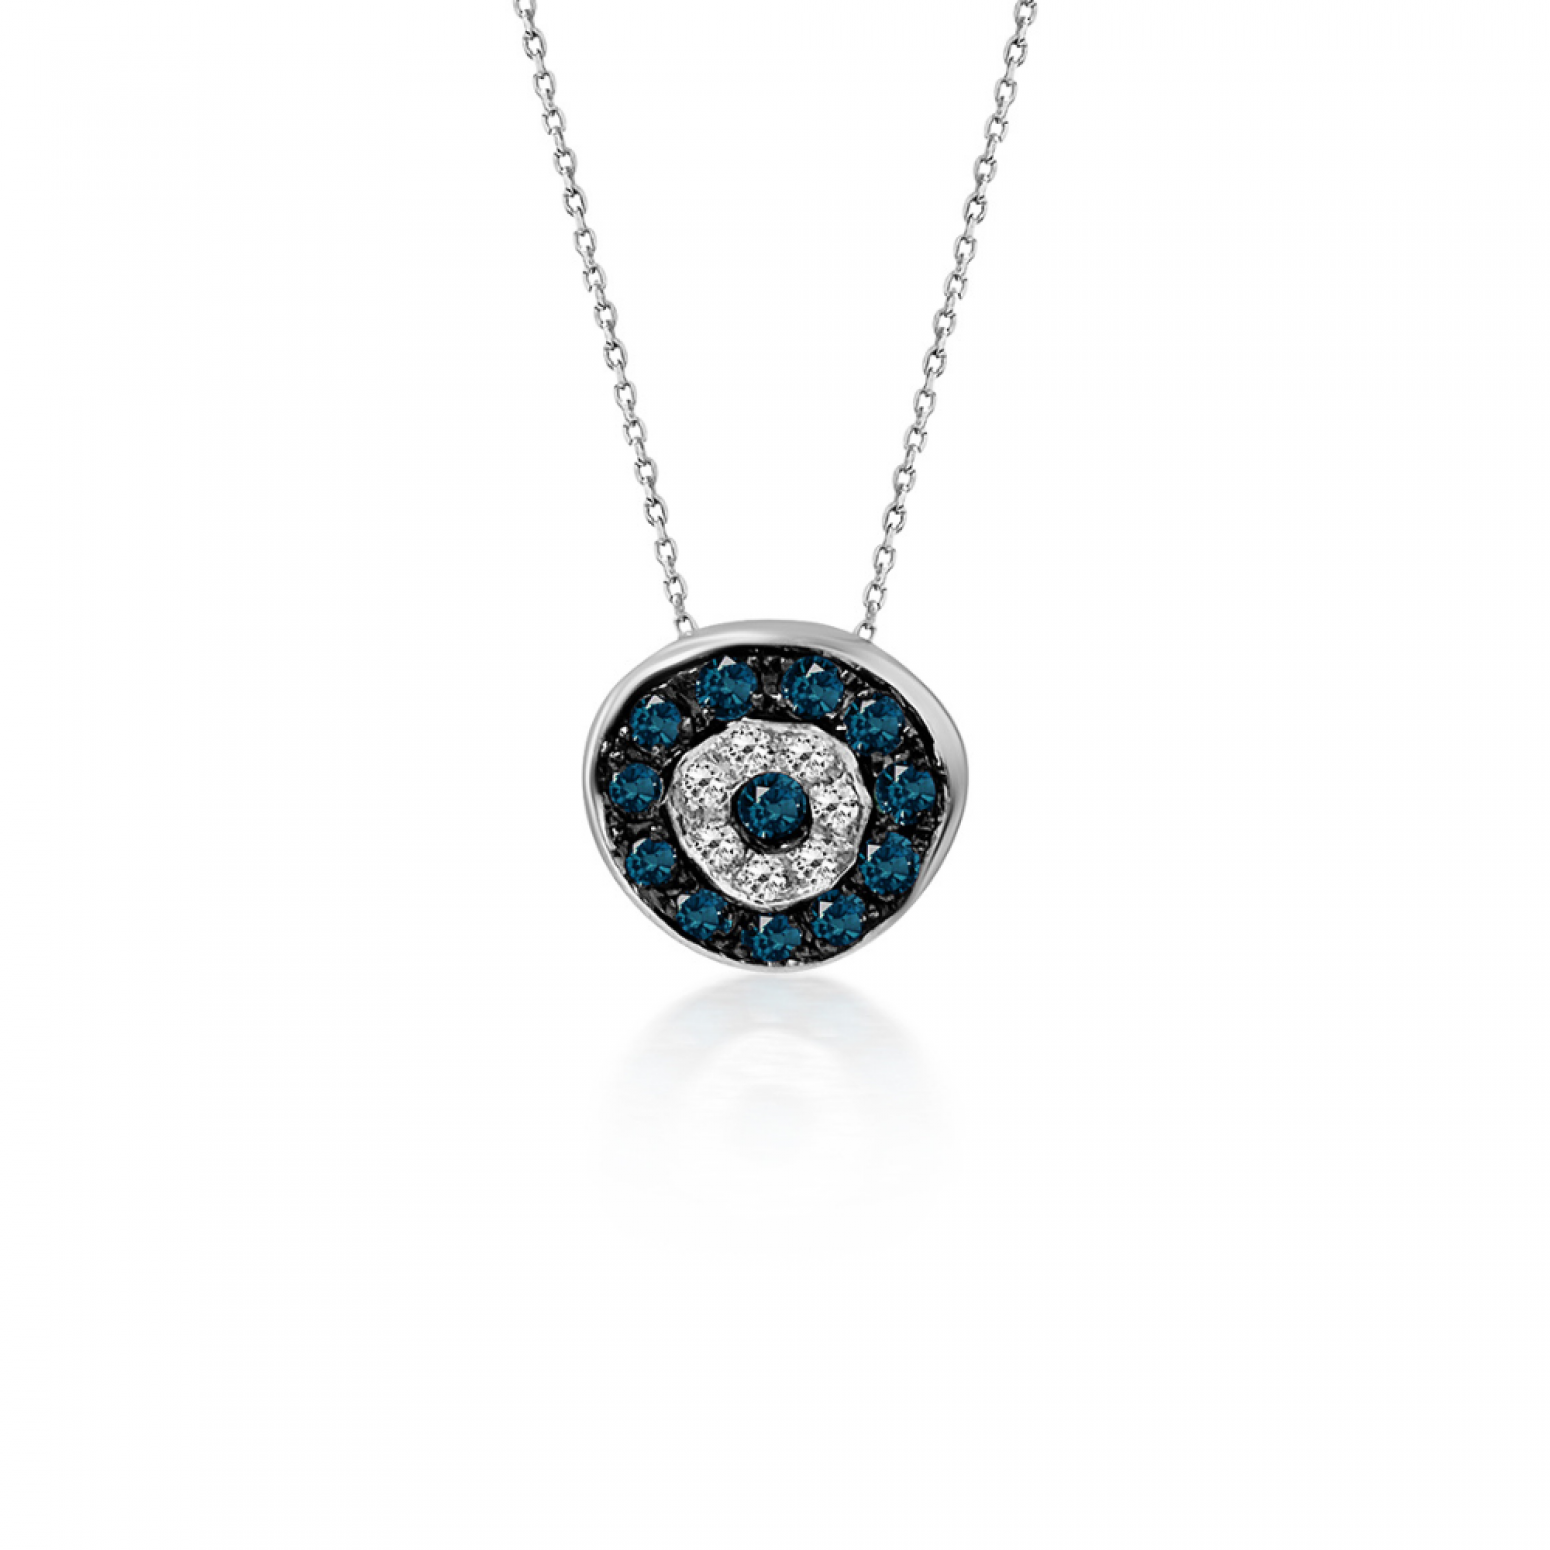 Eye necklace, Κ9 white gold with London Blue topaz 0.50ct and diamonds 0.06ct, VS1, H ko5909 NECKLACES Κοσμηματα - chrilia.gr